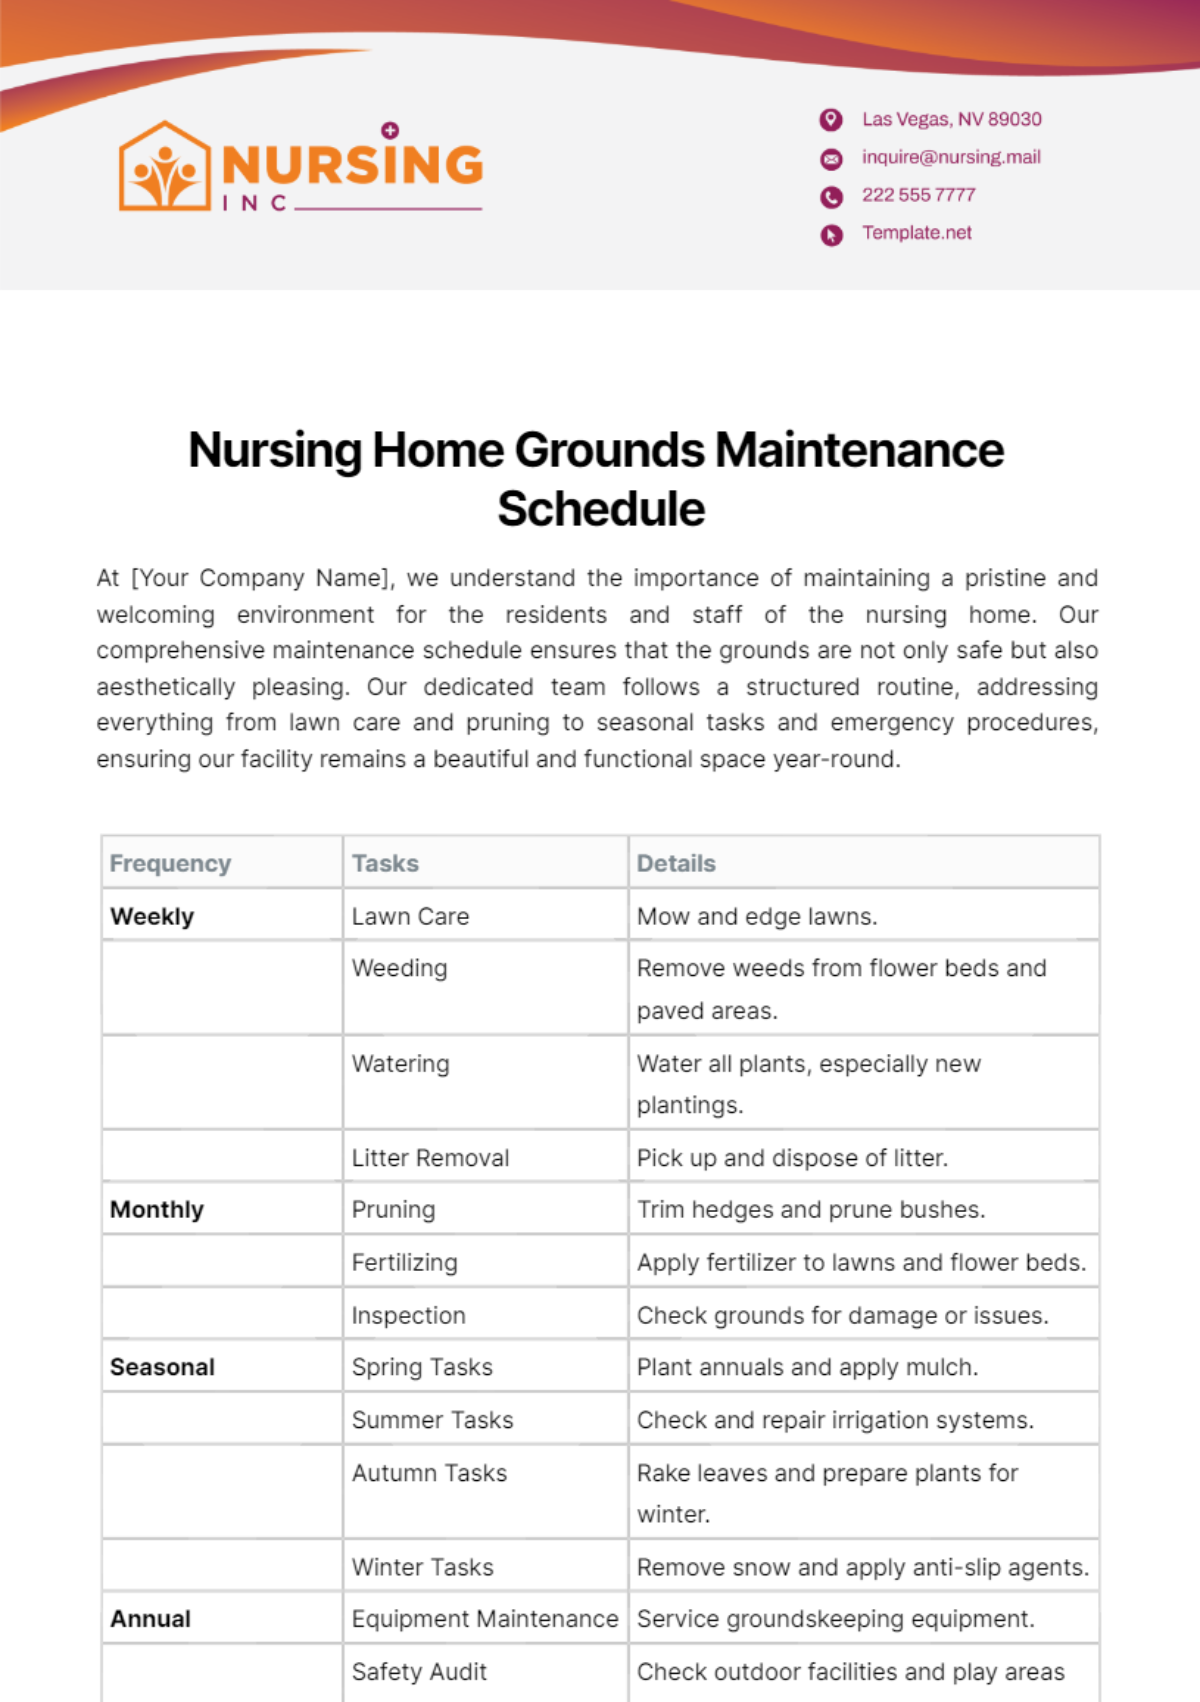 Nursing Home Grounds Maintenance Schedule Template